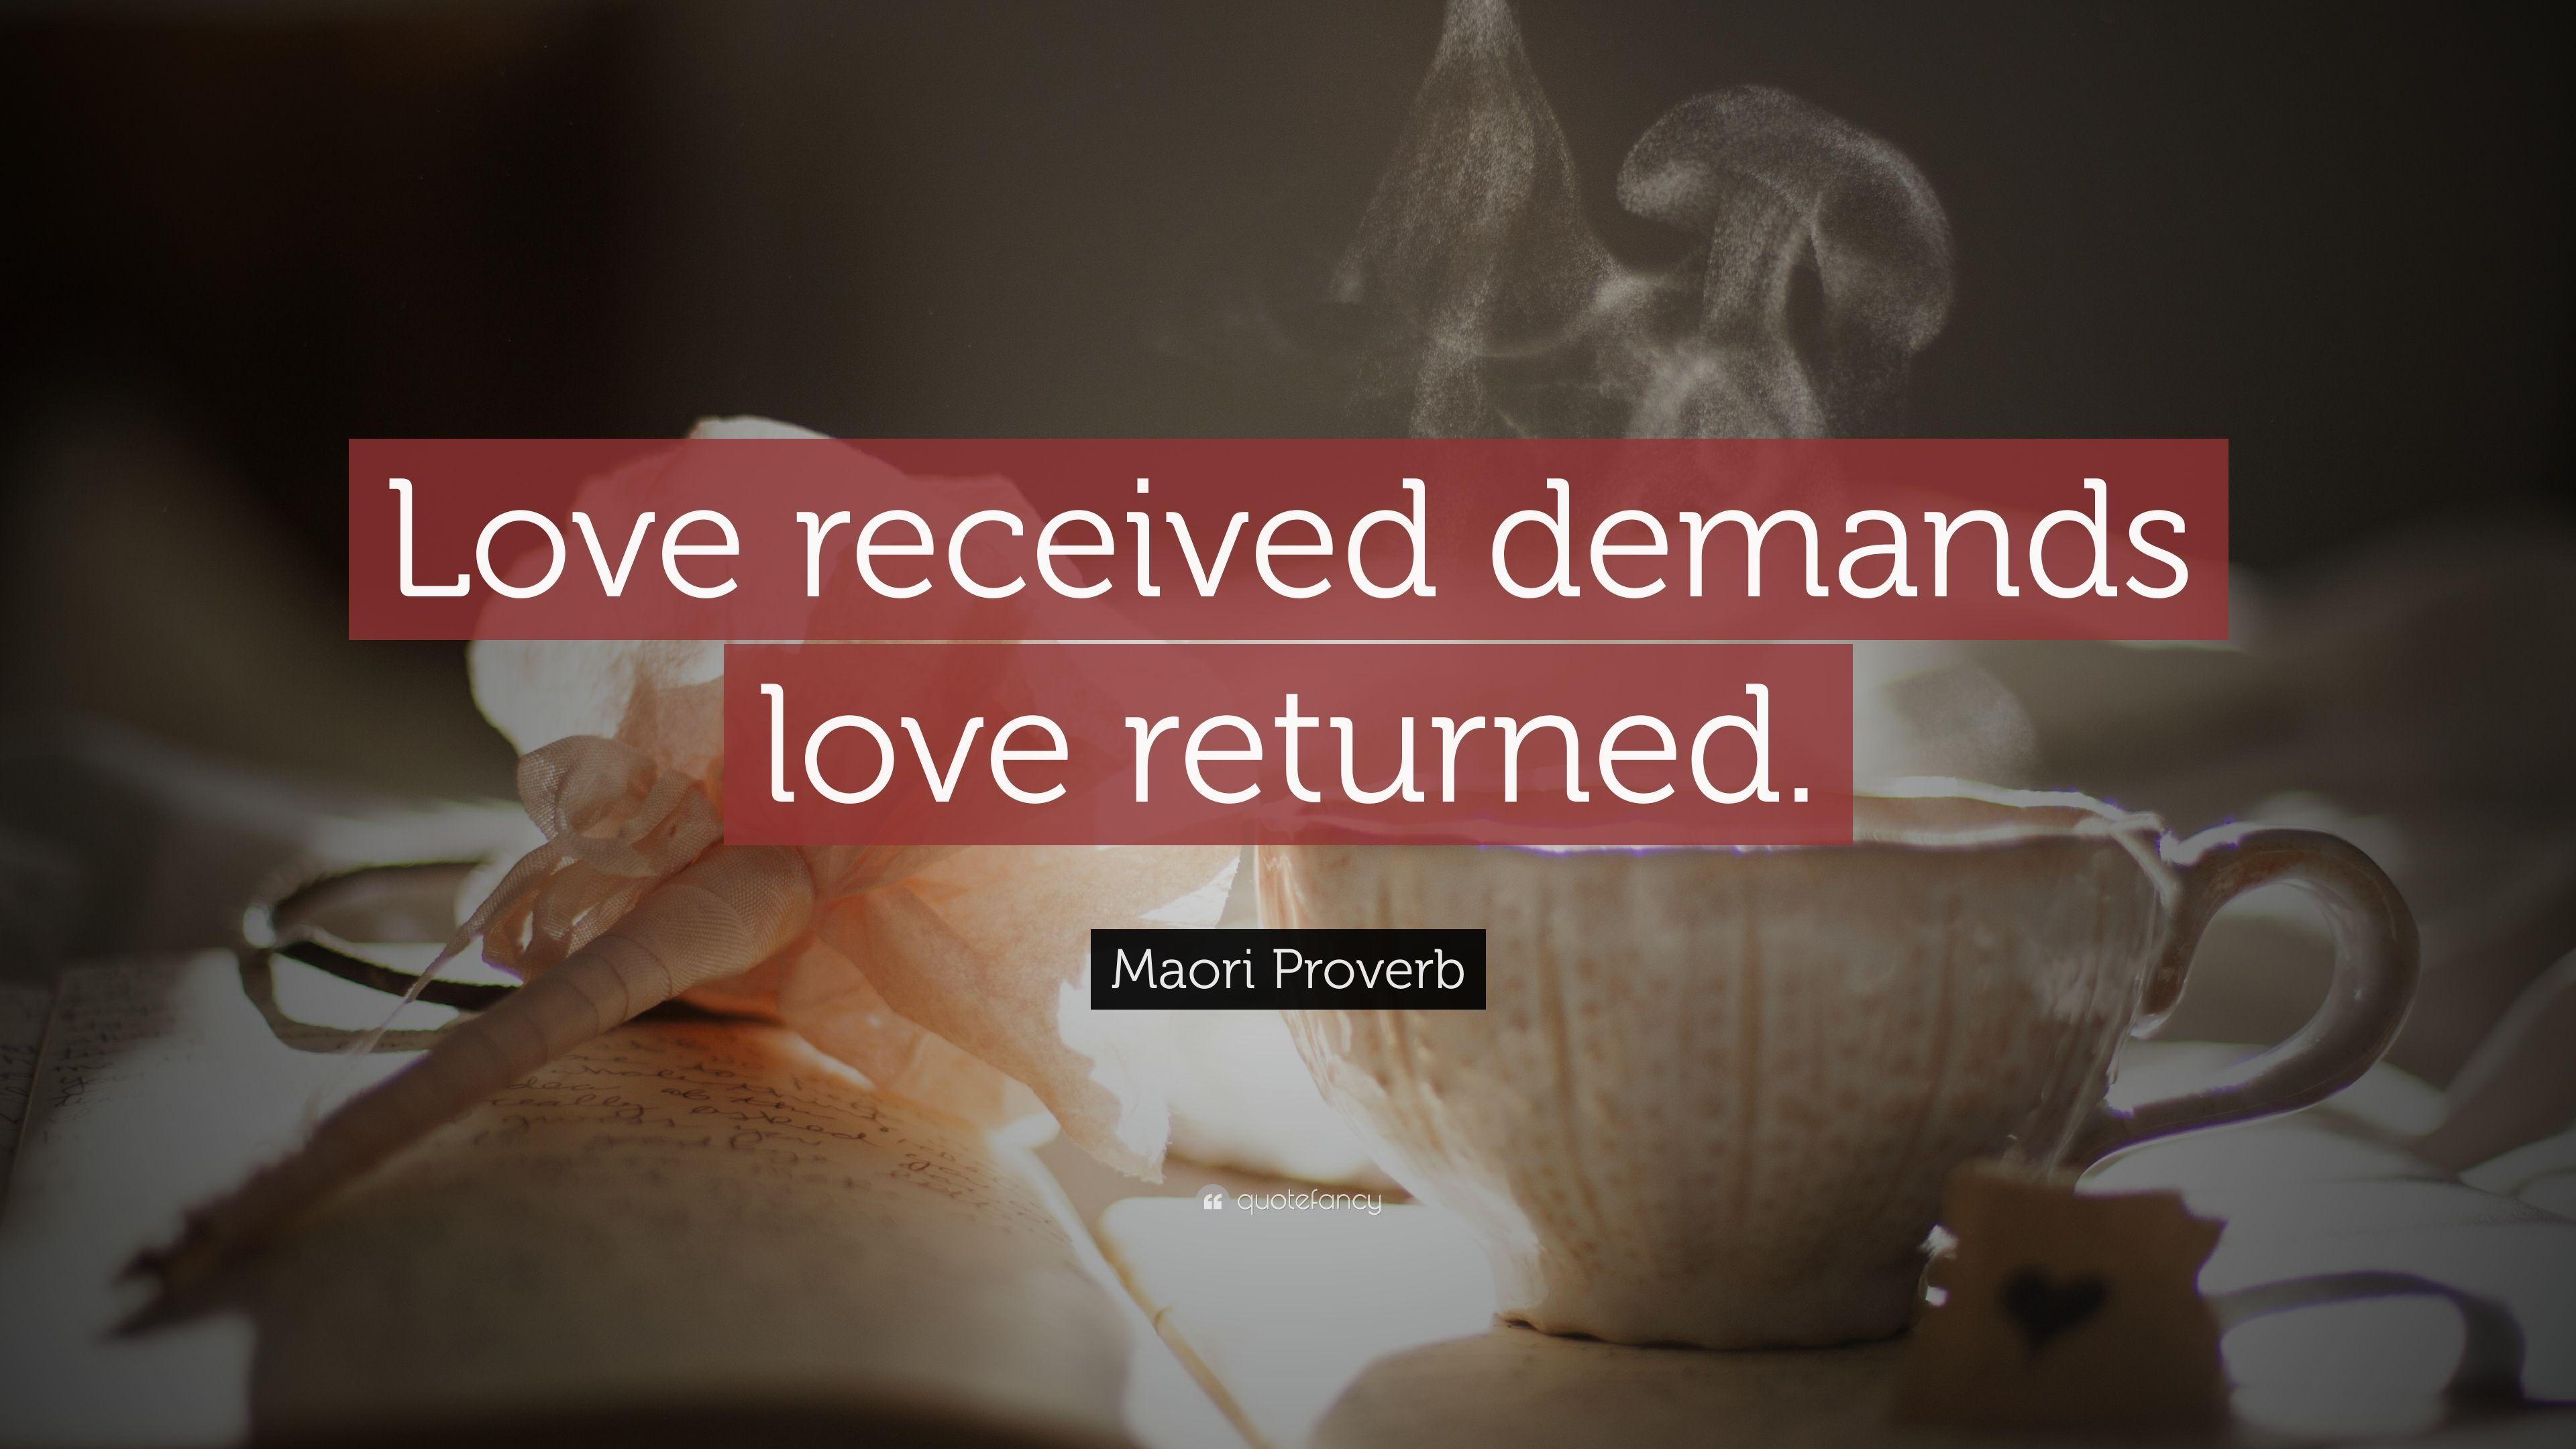 Maori Proverb Quote: “Love received demands love returned.” 12